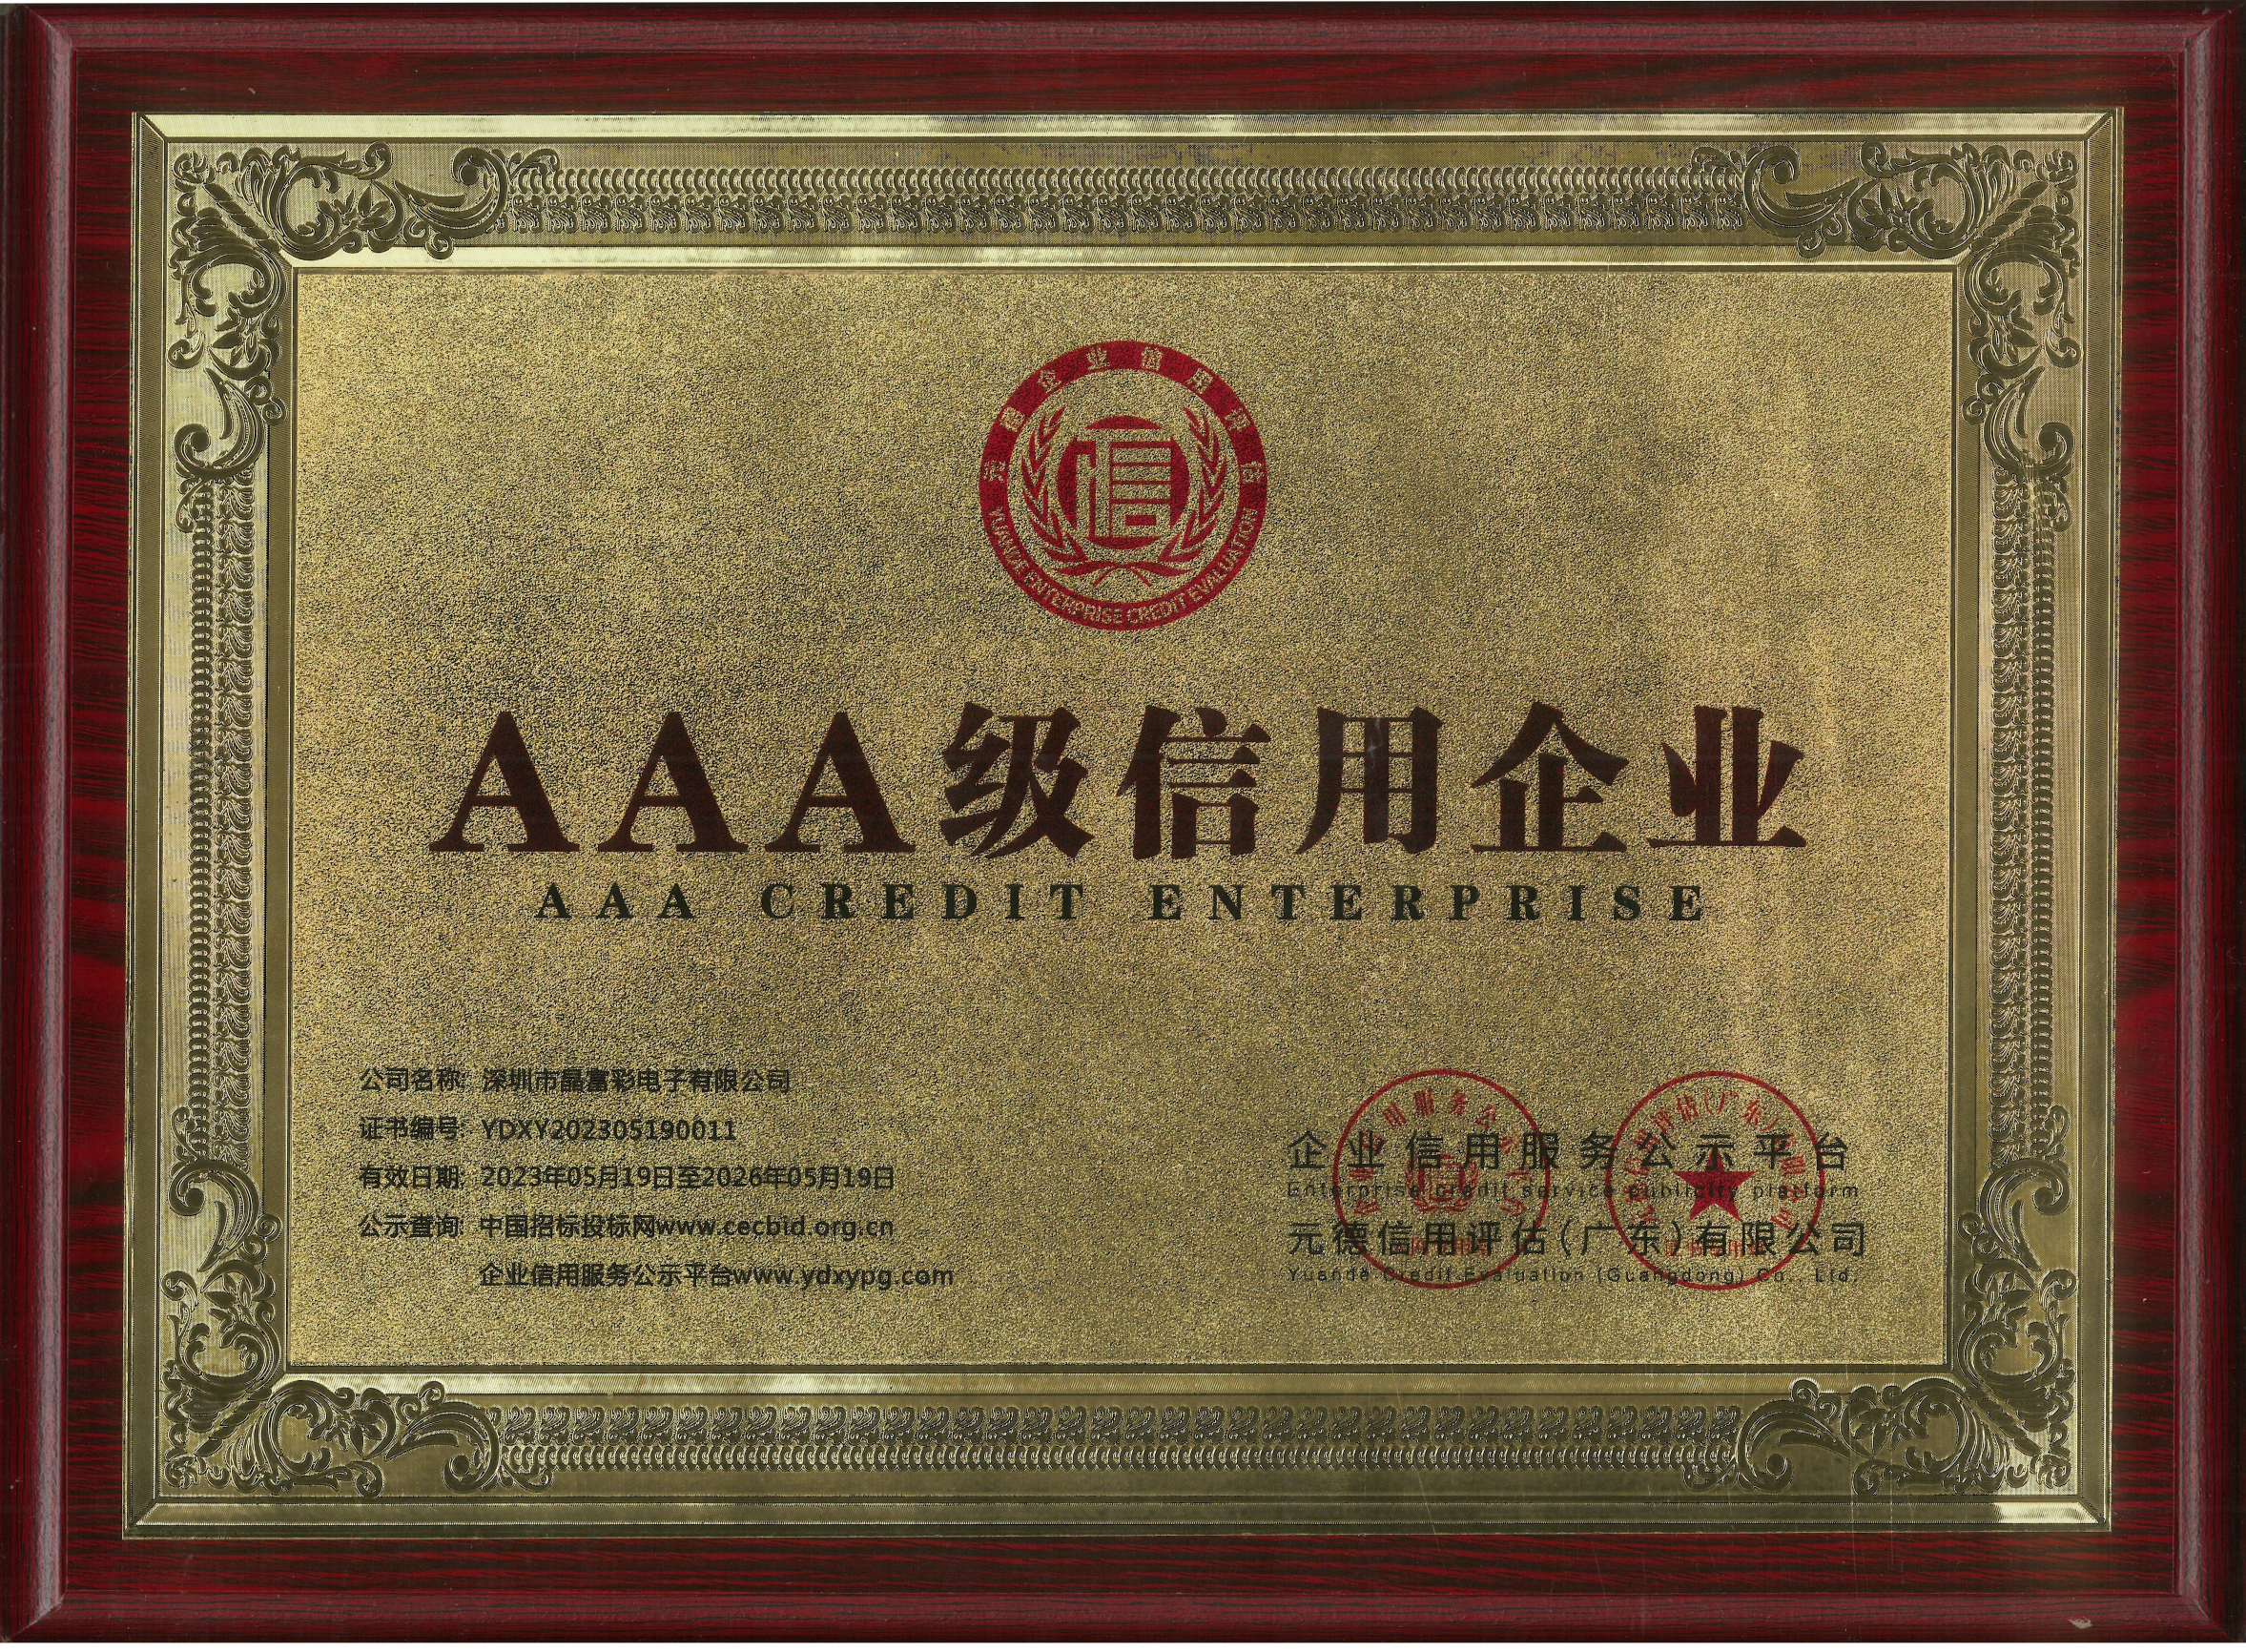 3A(AAA) Grade credit enterprise certificate